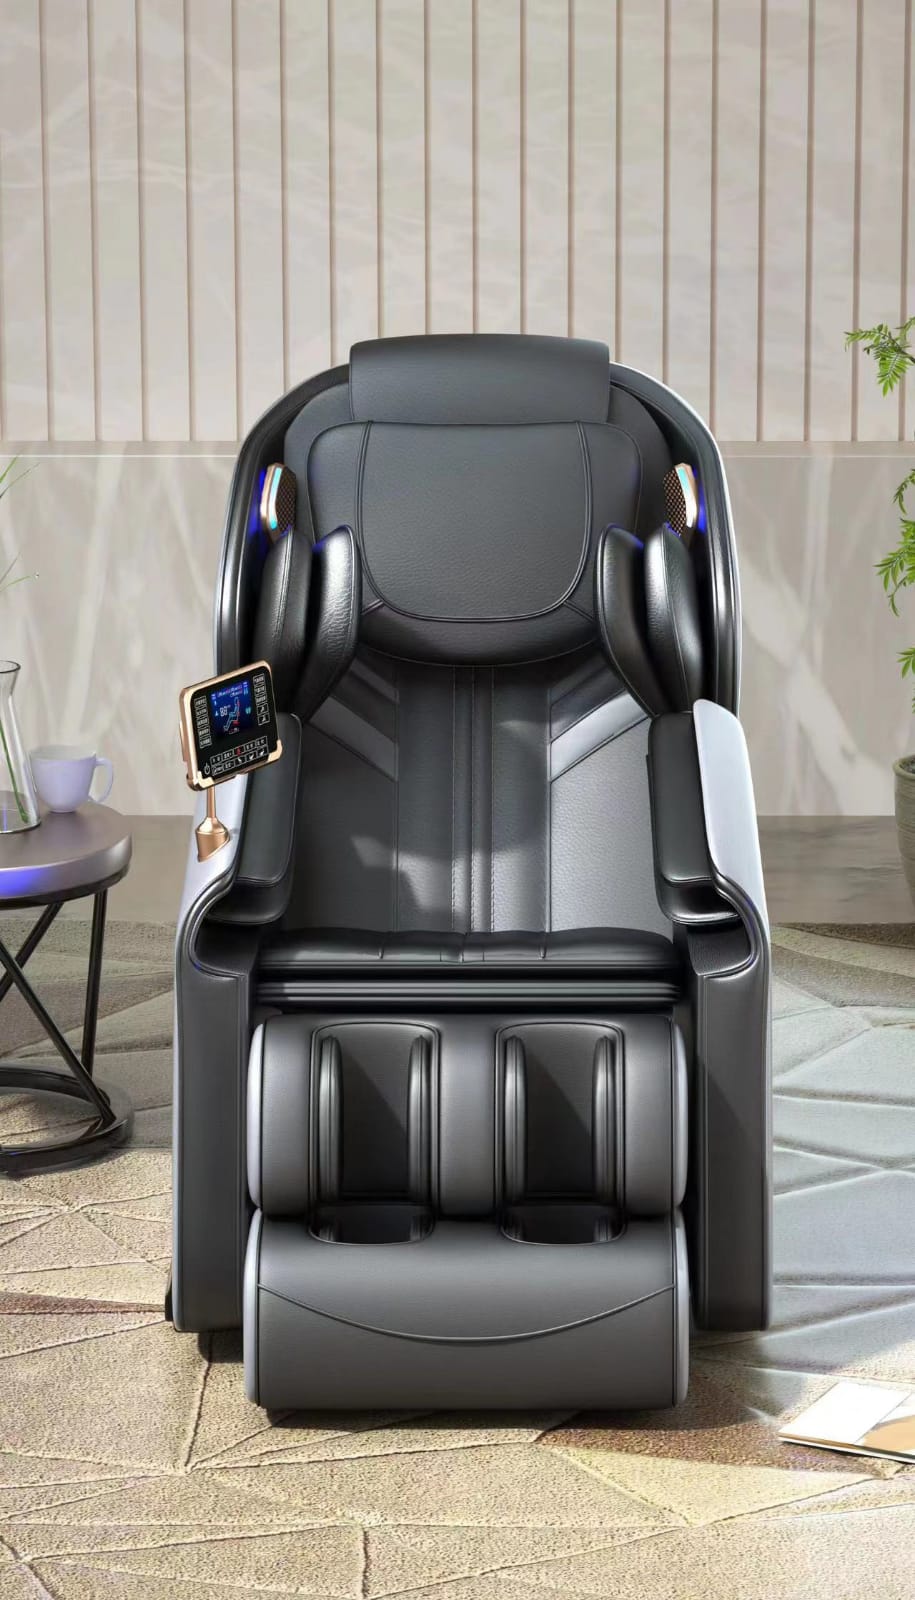 GetFitPro 5D SL TRACK Luxury Massage Chair with free Led TV & Trolley Speaker